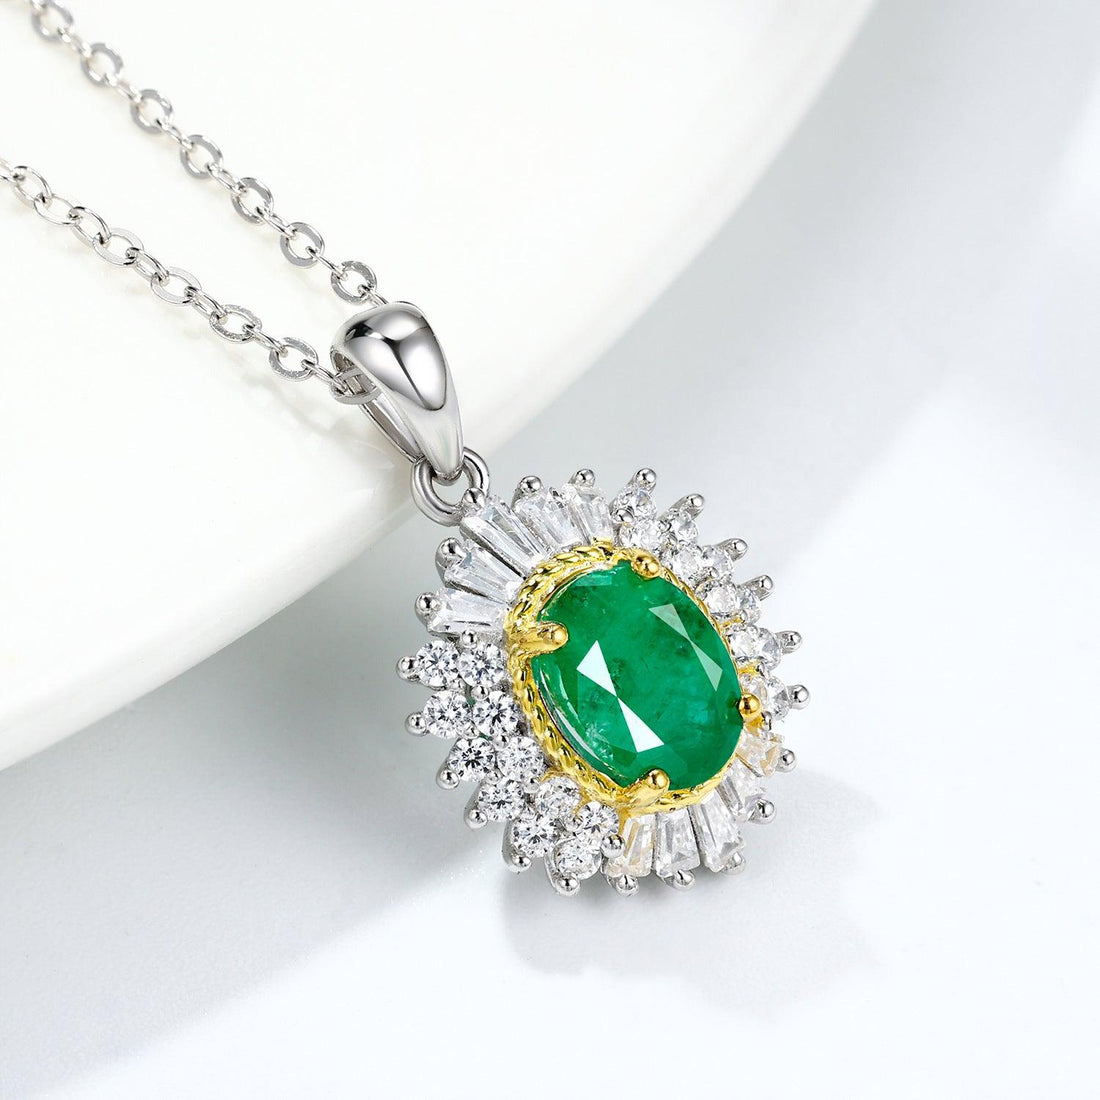 Exquisite Natural Emerald Pendant: S925 Silver Chain with Unique Feminine Design